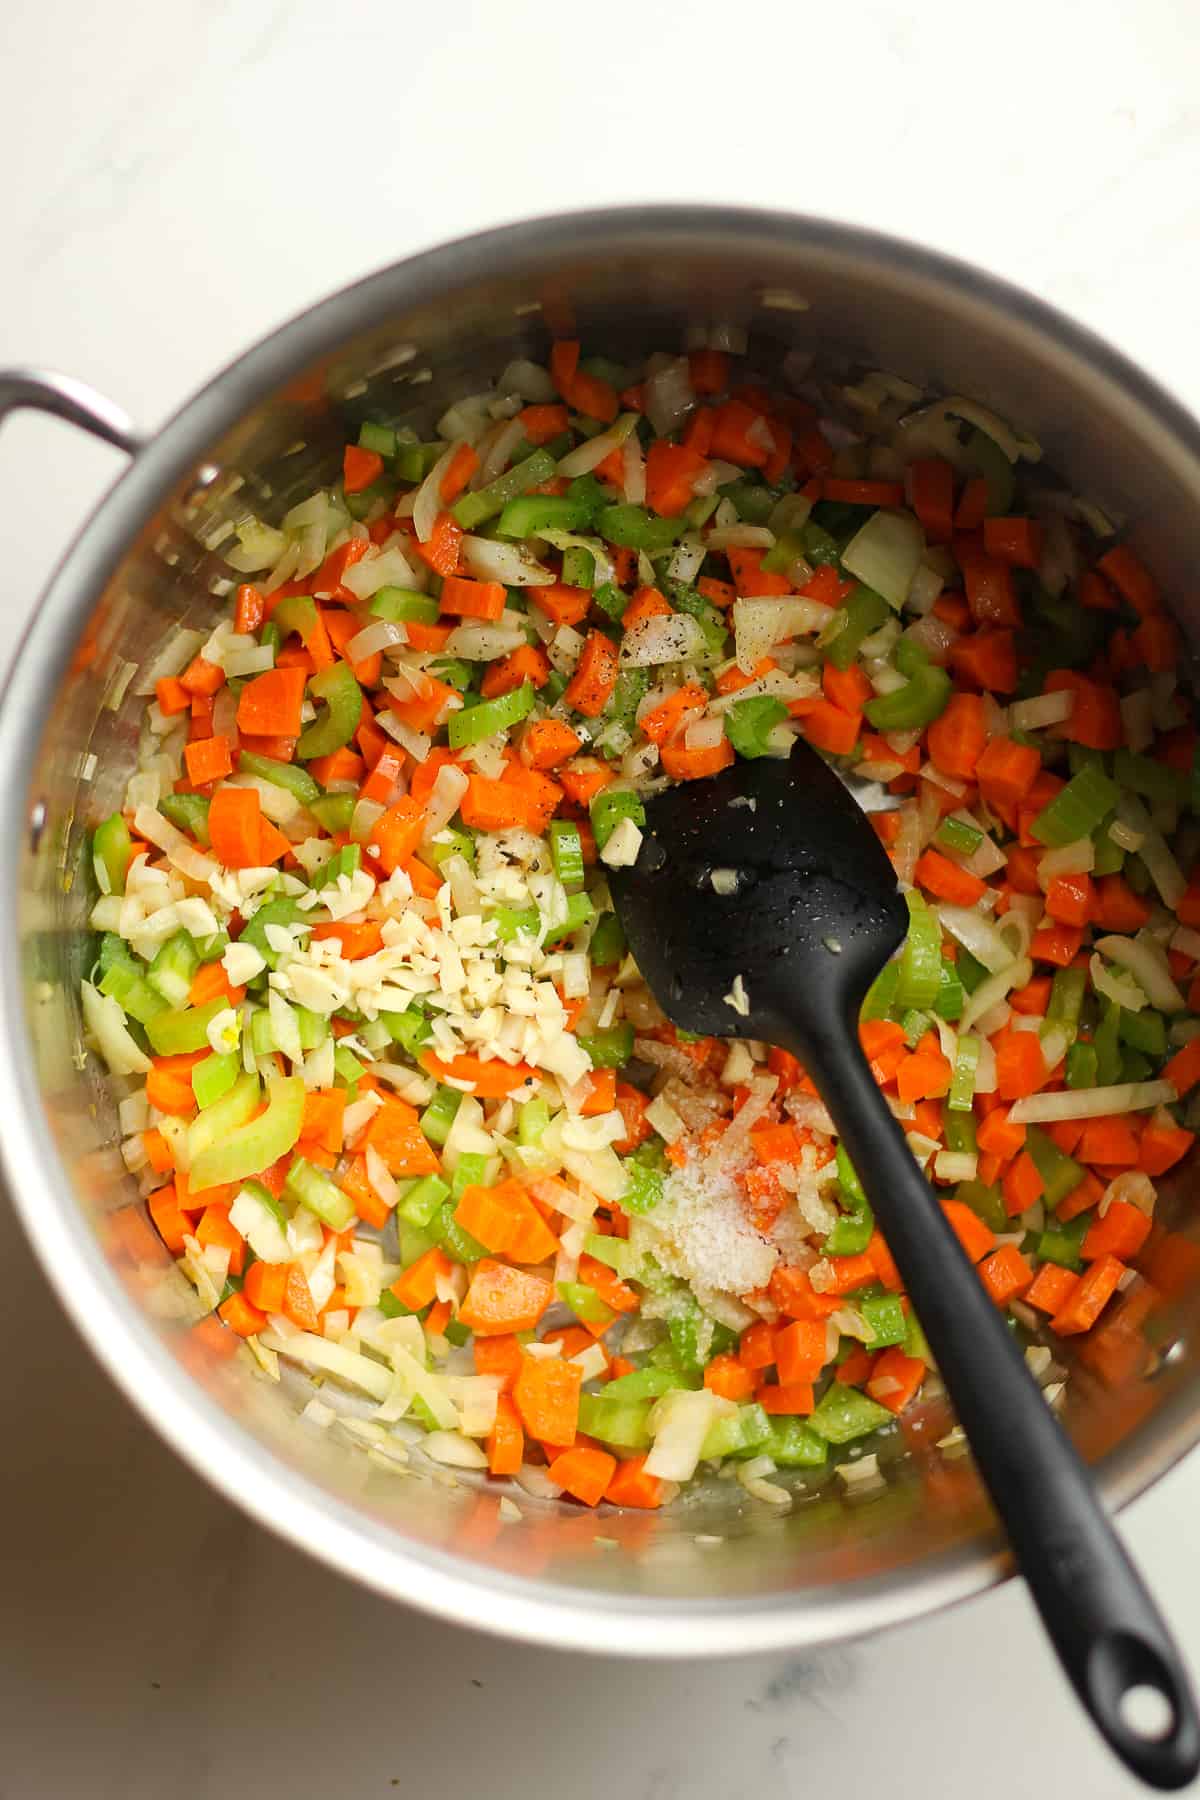 A pot of the sautéed veggies.